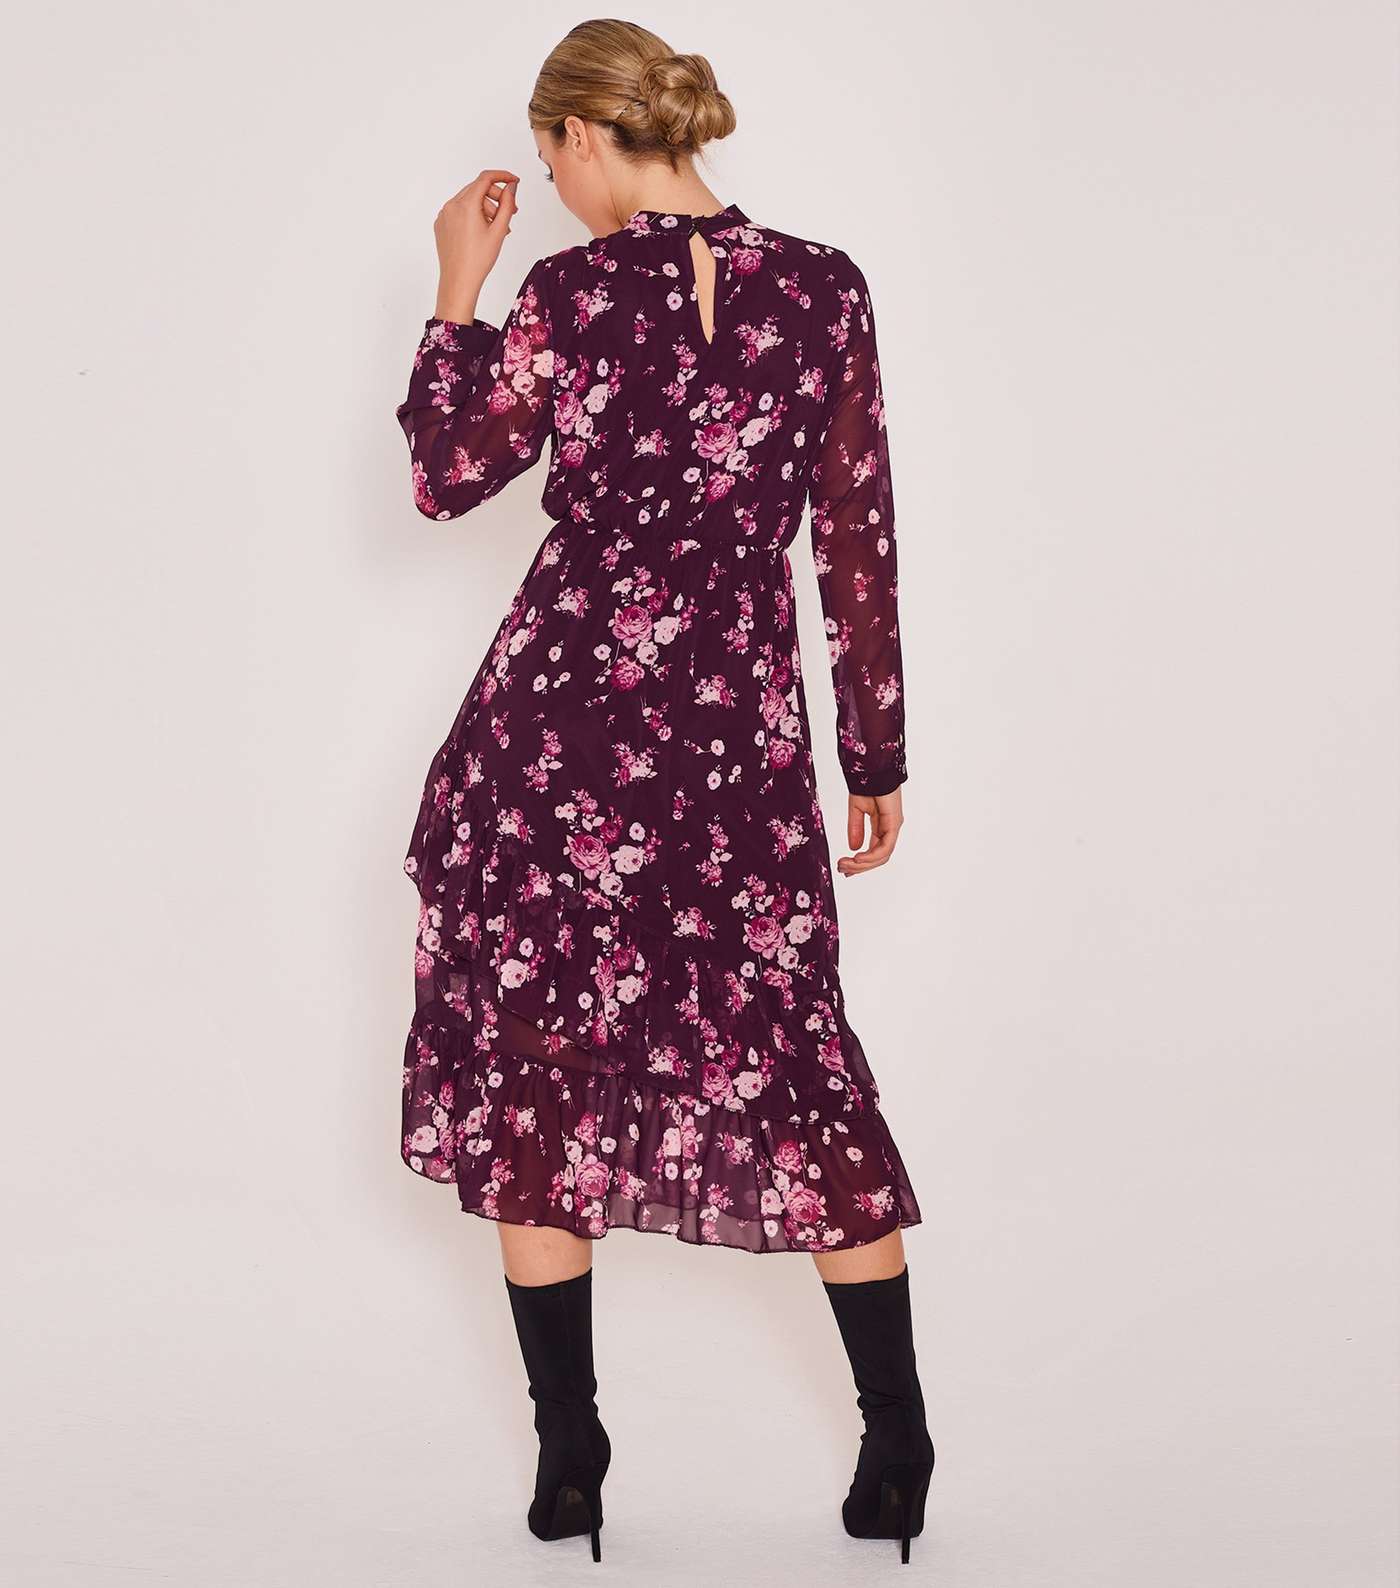 Zibi London Burgundy Floral Chiffon Midi Dress Image 3